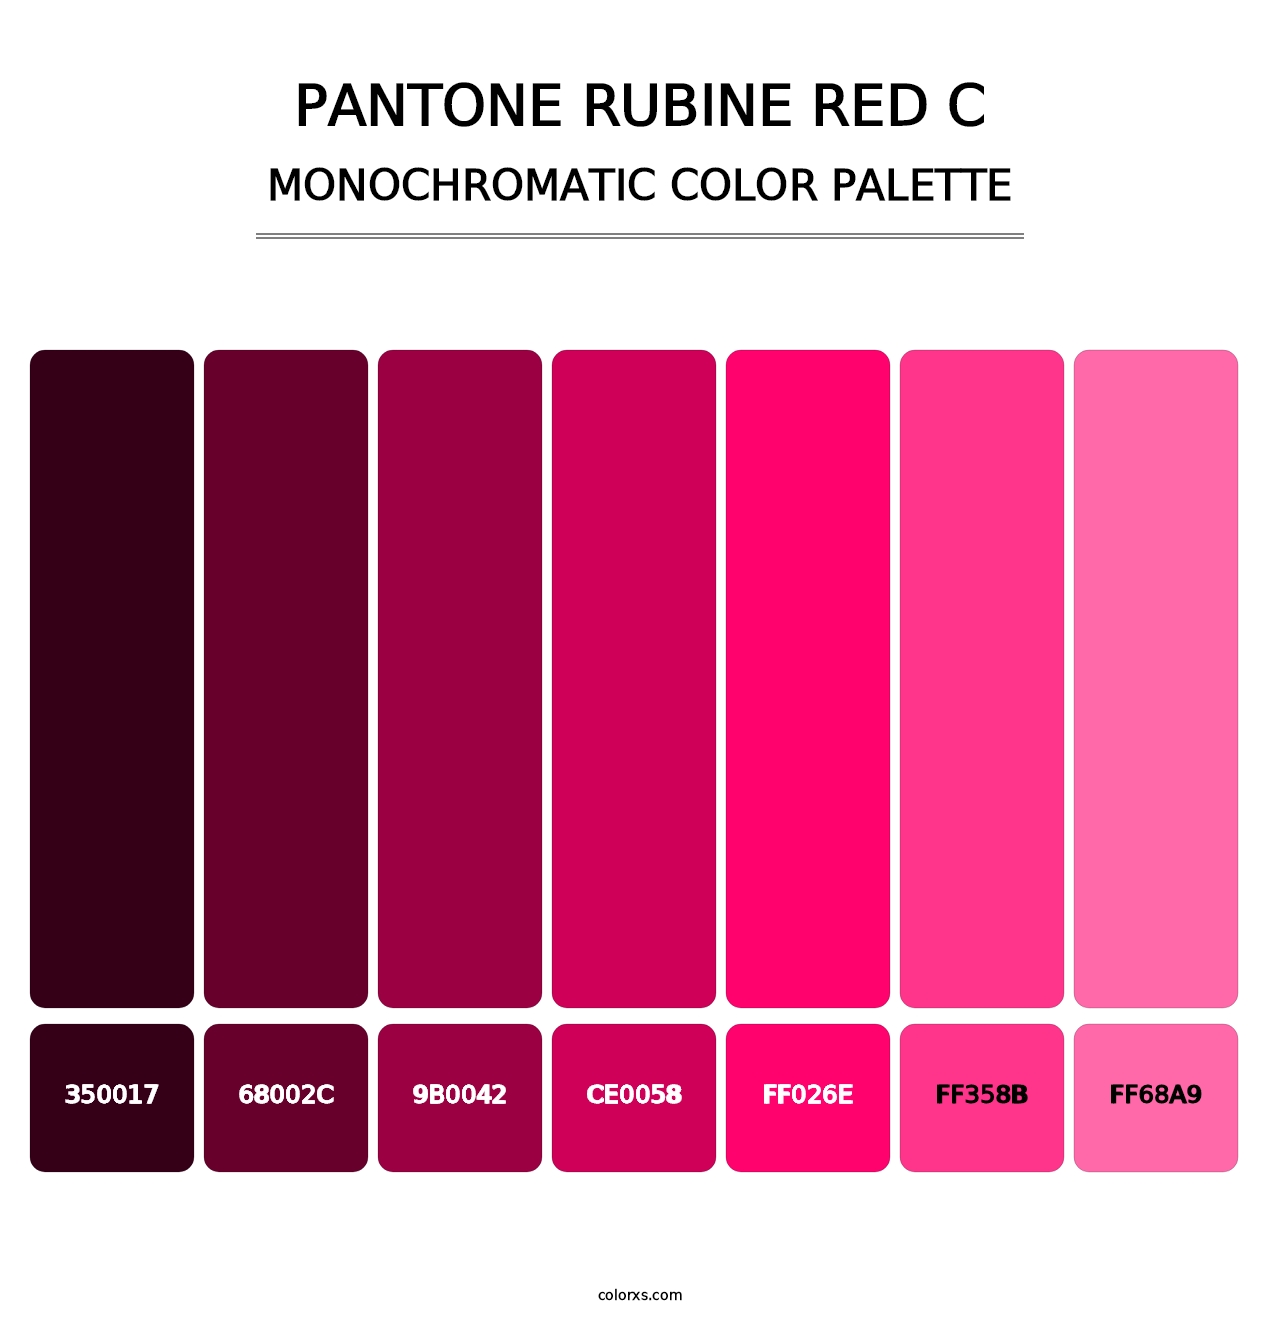 PANTONE Rubine Red C - Monochromatic Color Palette